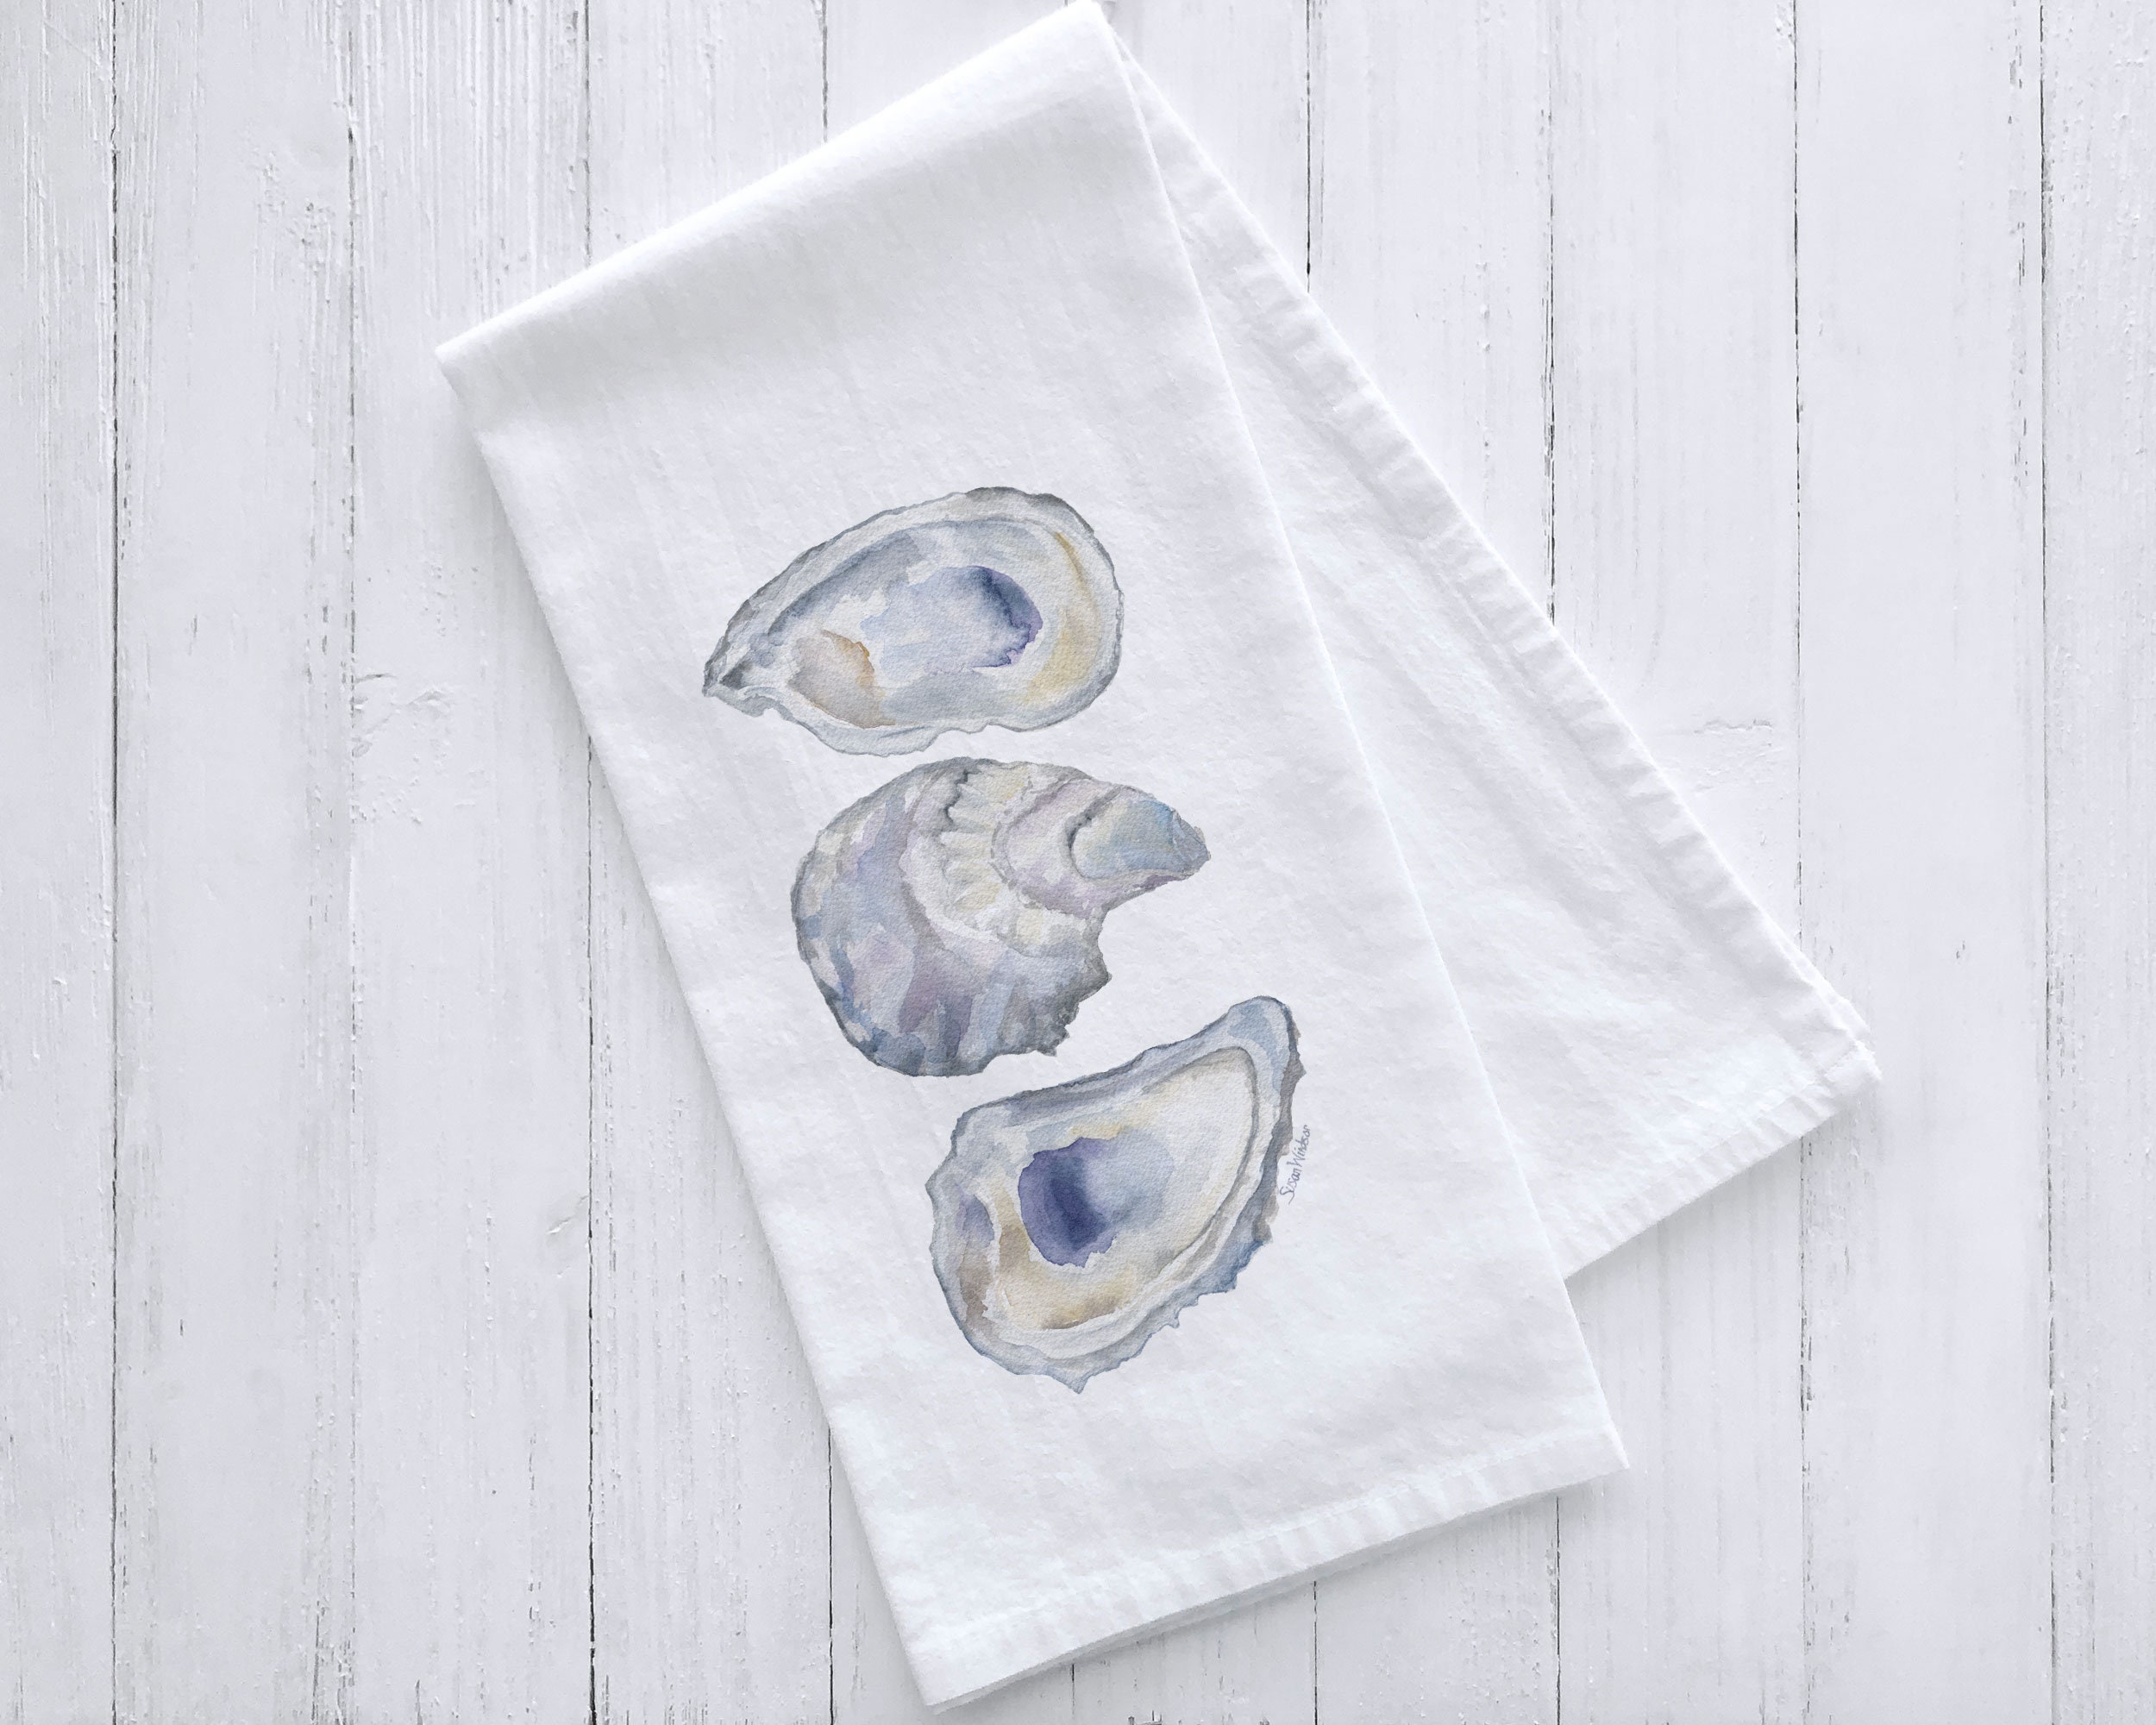 Seaside Beach Dish Towels Seashells with Slogans 15”x25” 2/Pk